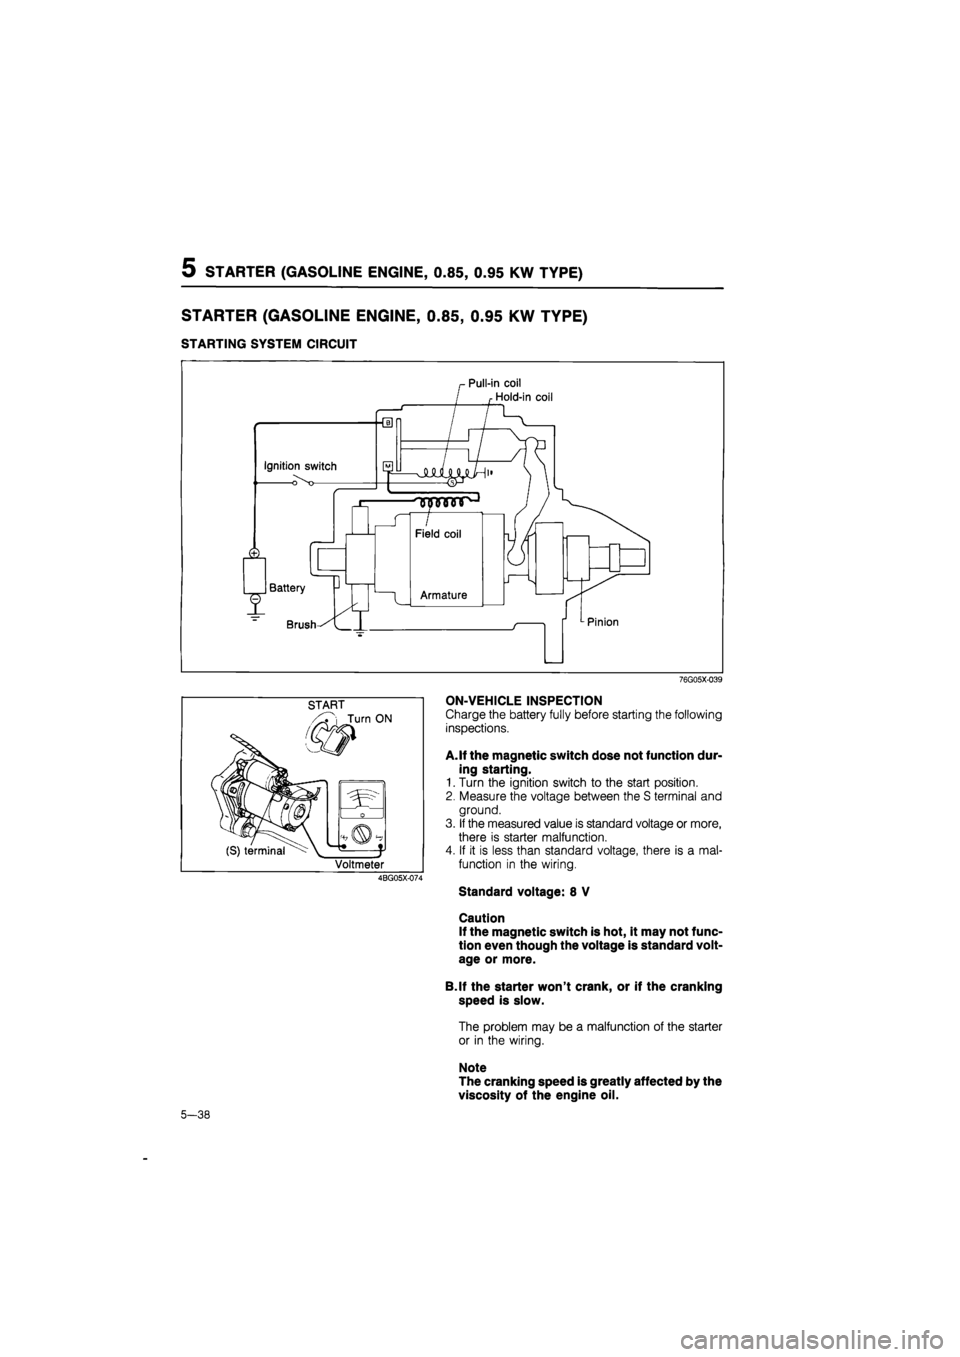 MAZDA 626 1987  Workshop Manual 
5 STARTER (GASOLINE ENGINE, 0.85, 0.95 KW TYPE) 
STARTER (GASOLINE
 ENGINE, 0.85, 0.95
 KW TYPE) 
STARTING SYSTEM CIRCUIT 
76G05X-039 
START 
i Turn ON 
(S) terminal 
0 
t* t 
Voltmeter 
4BG05X-074 
